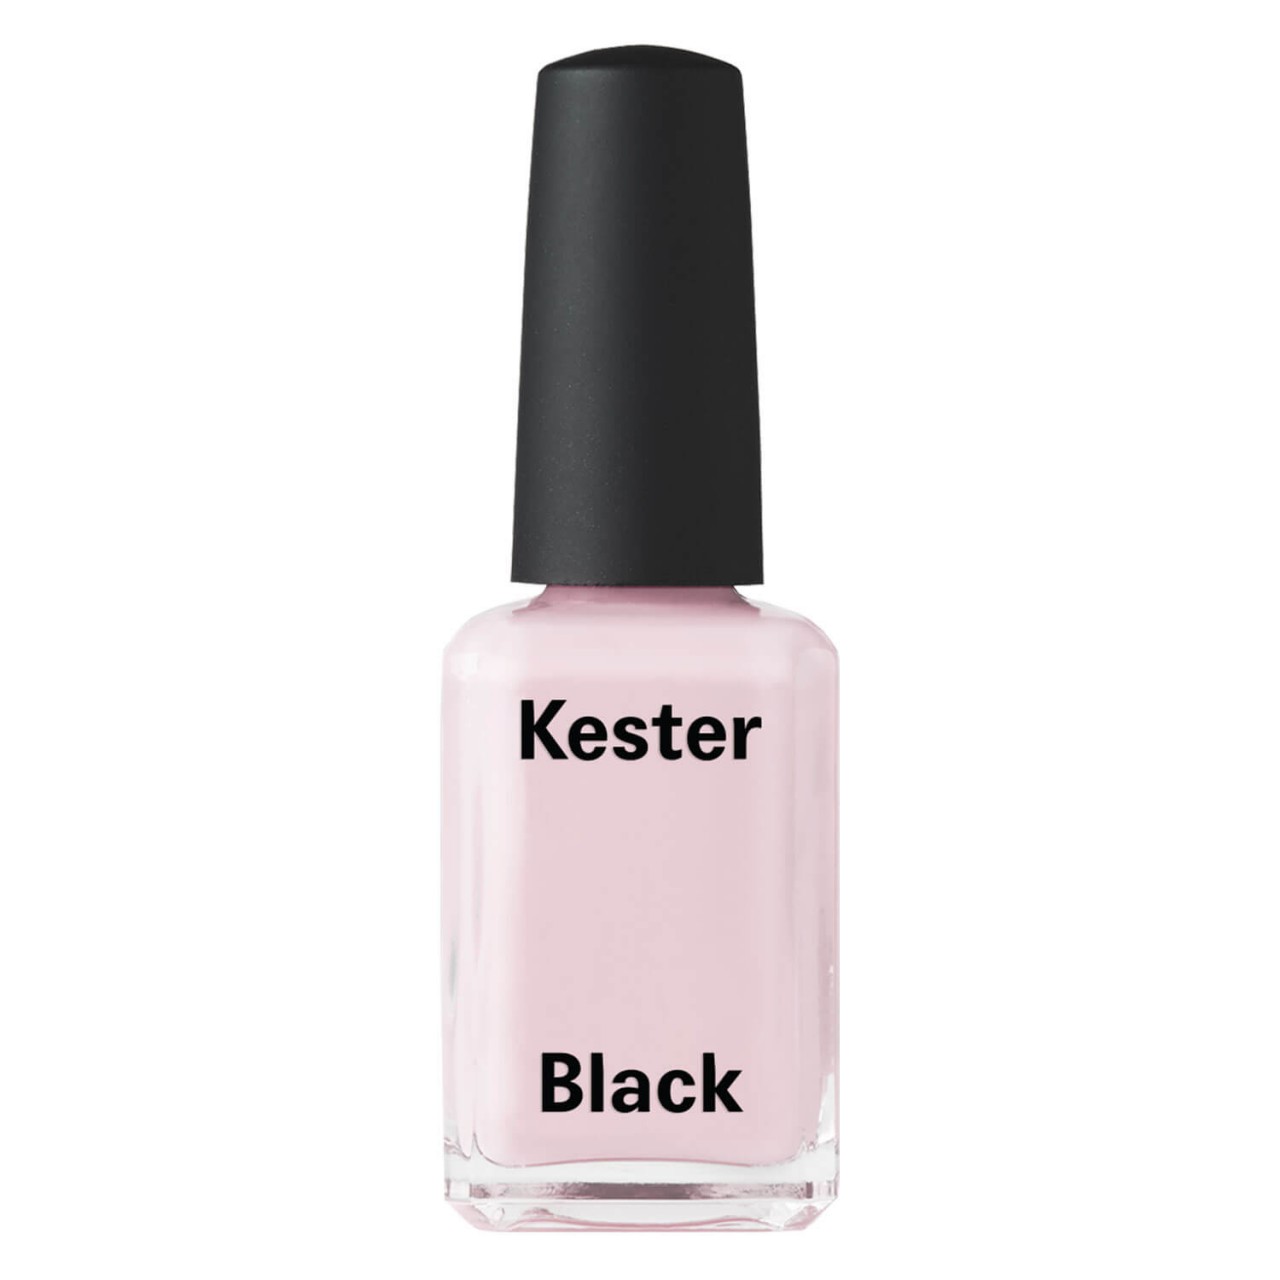 KB Colours - The Future Is Female von Kester Black